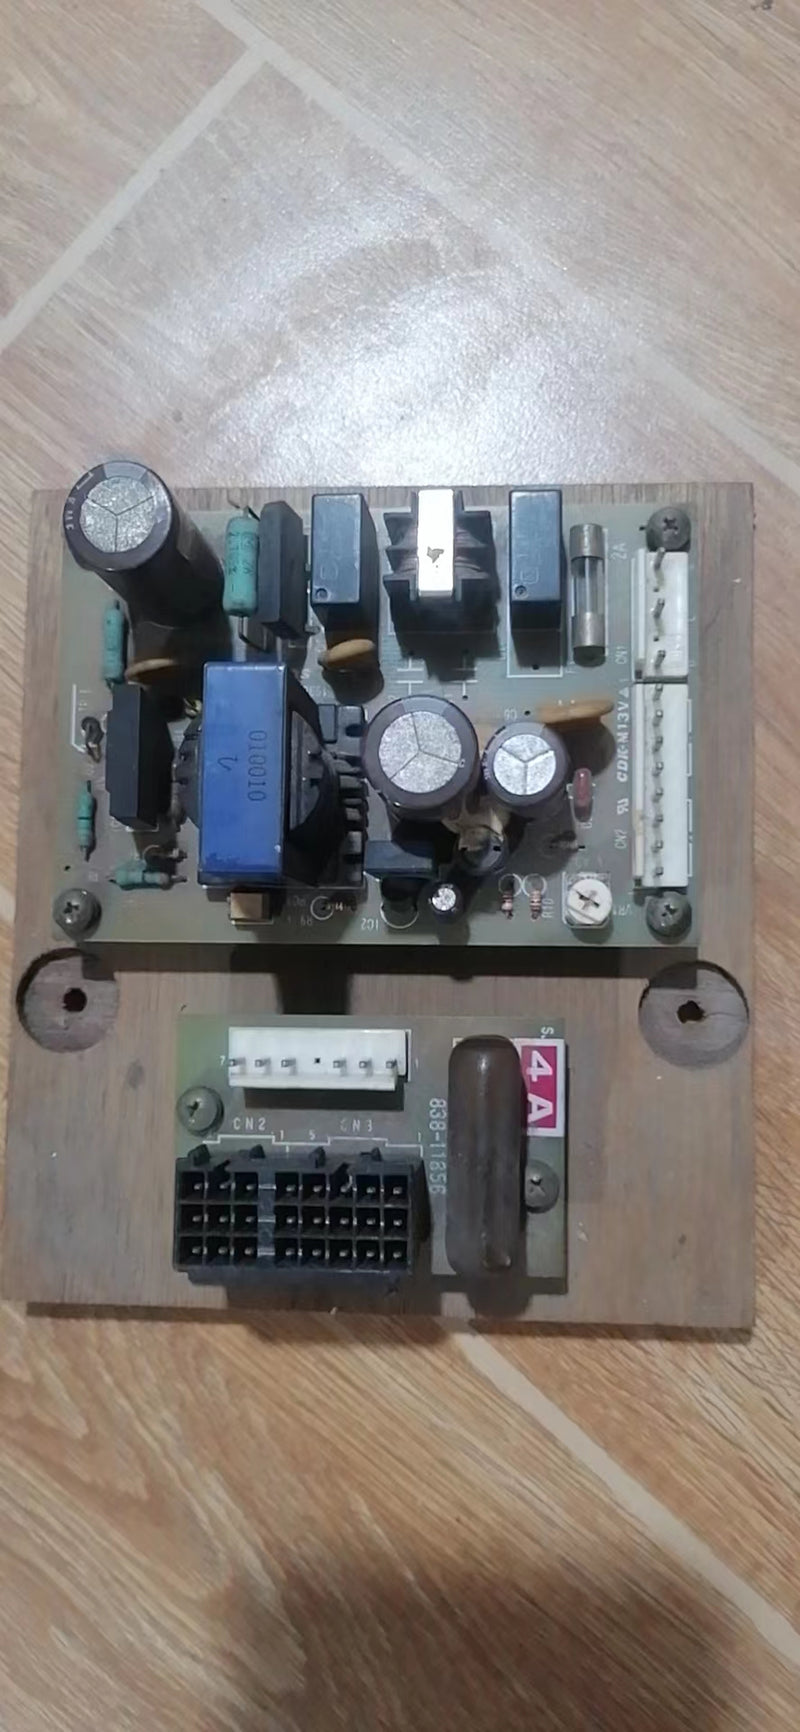 sega arcade power supply interface board .tested working